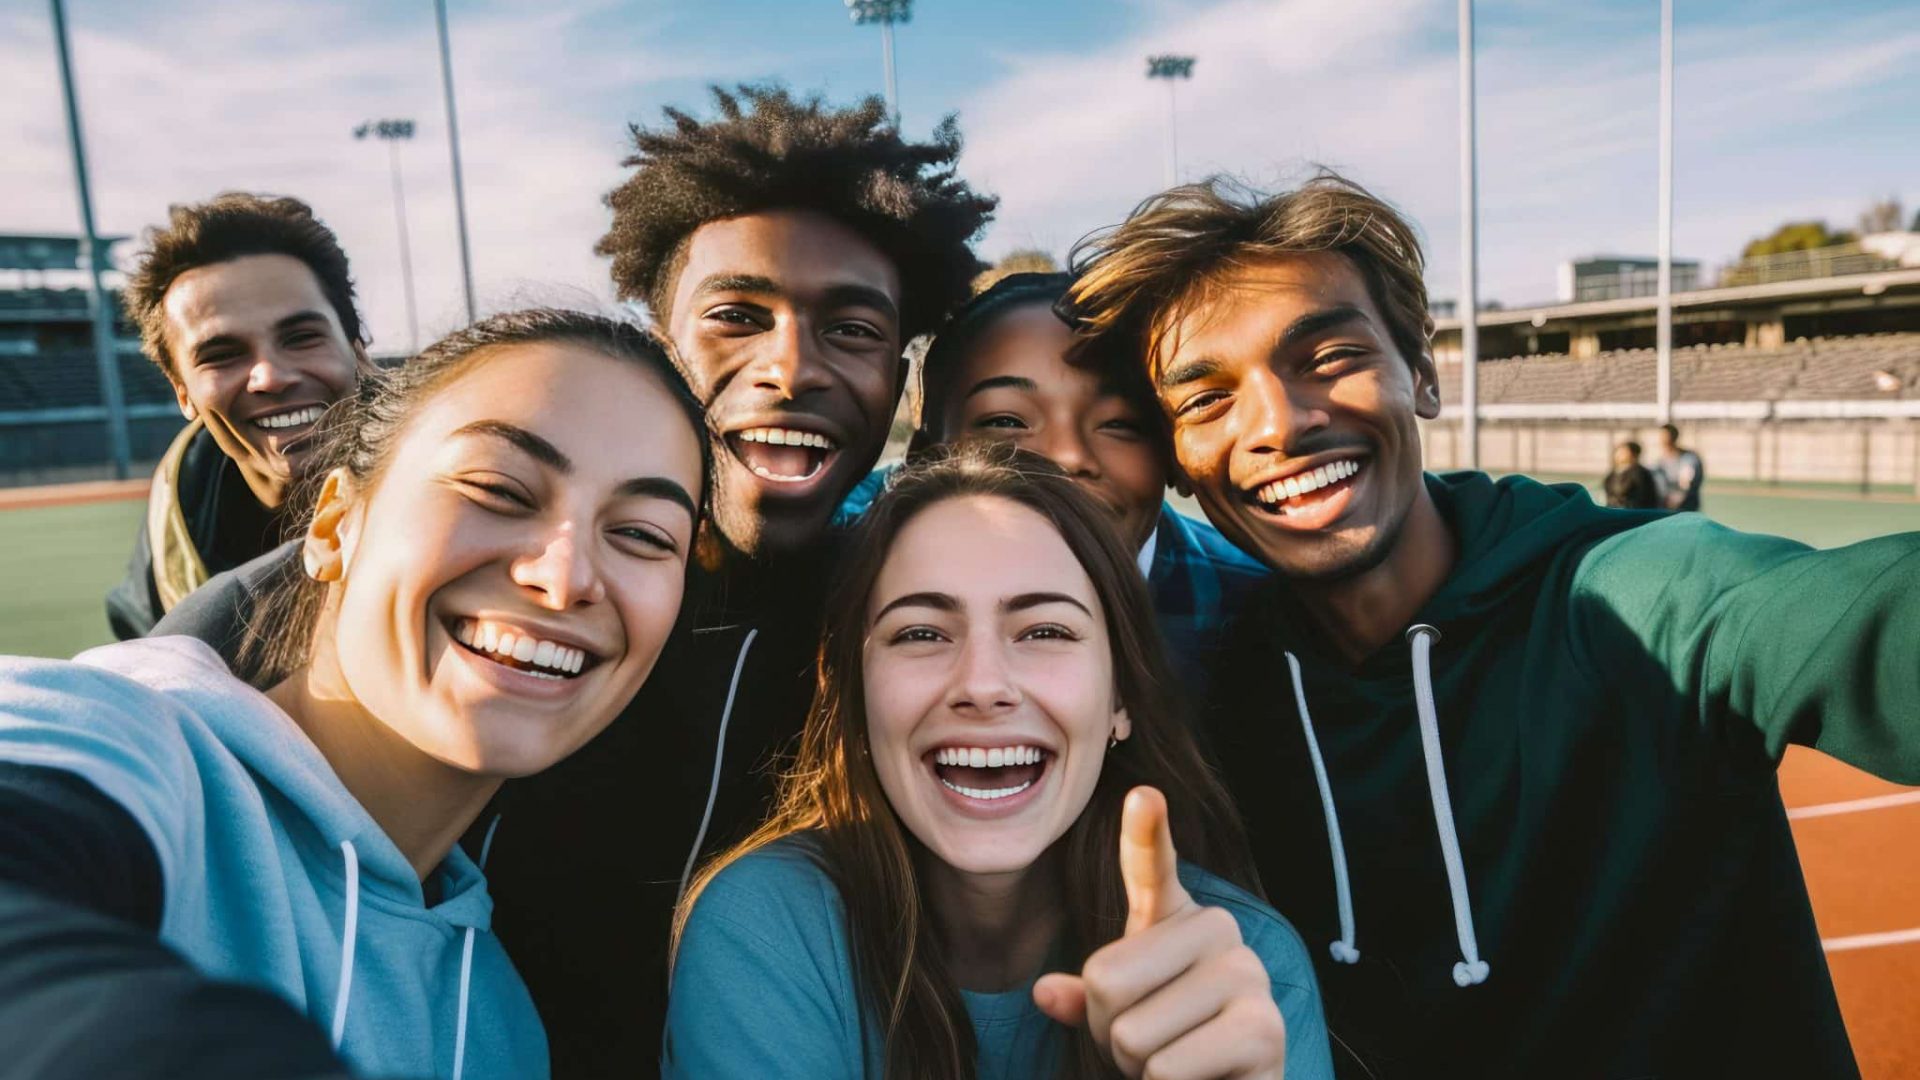 Happy diverse friends taking selfie on smartphone on sports ground